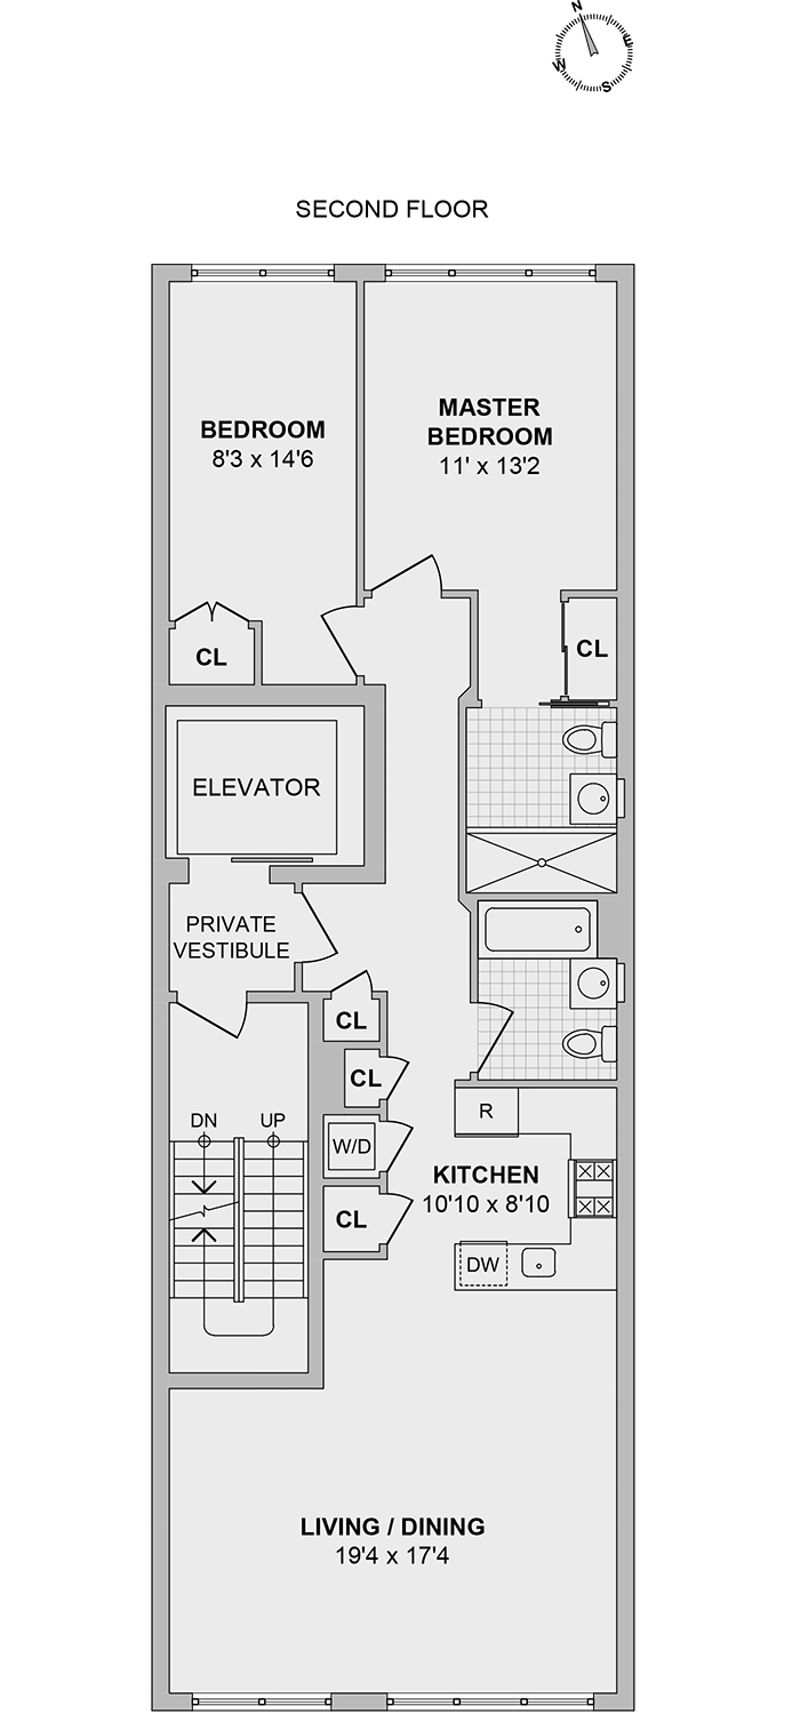 Floorplan for 215 West 122nd Street, 2